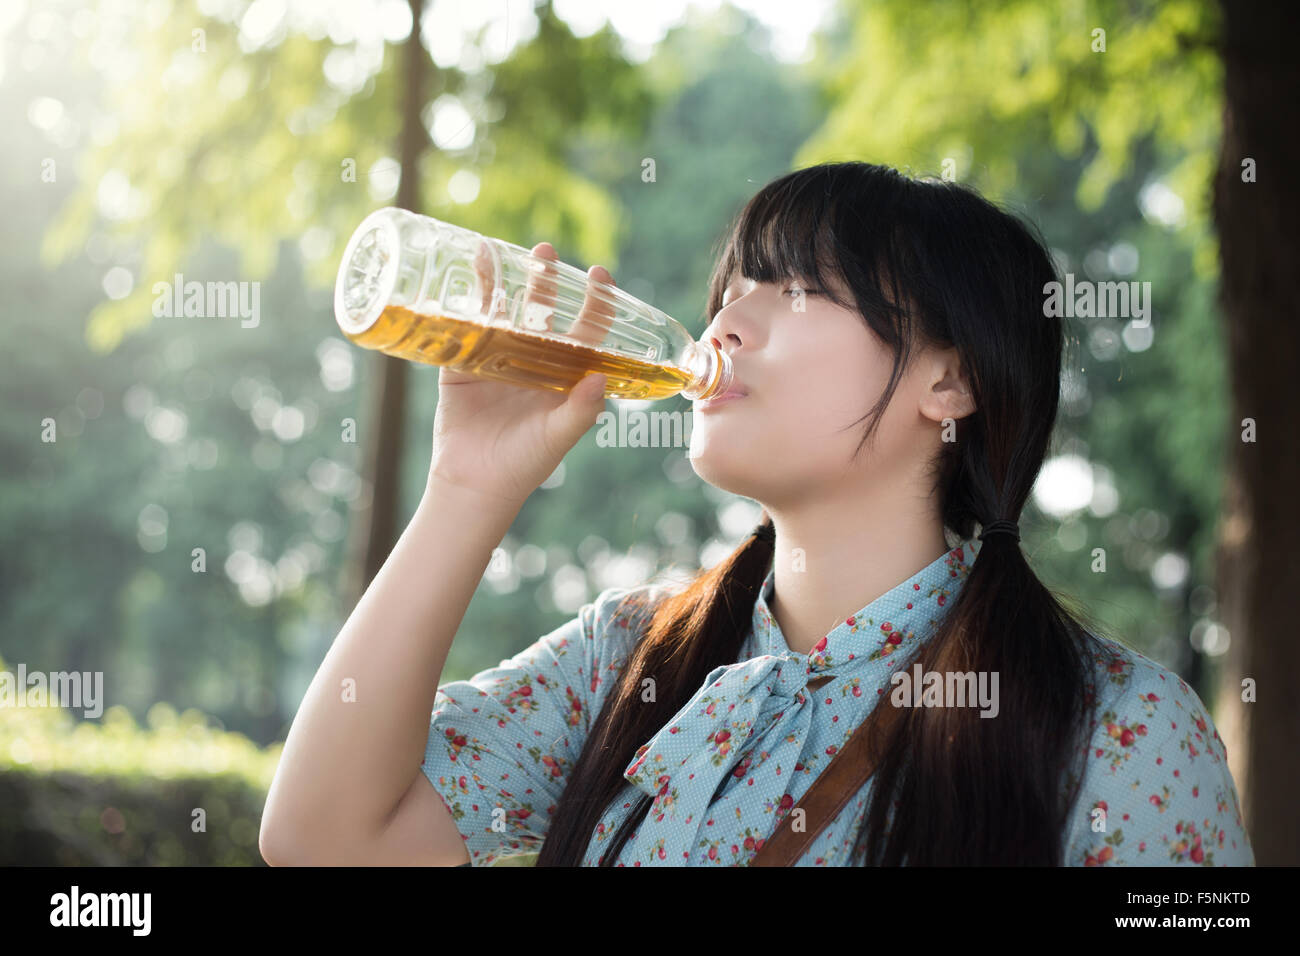 https://c8.alamy.com/comp/F5NKTD/asian-girl-drinking-beverage-F5NKTD.jpg